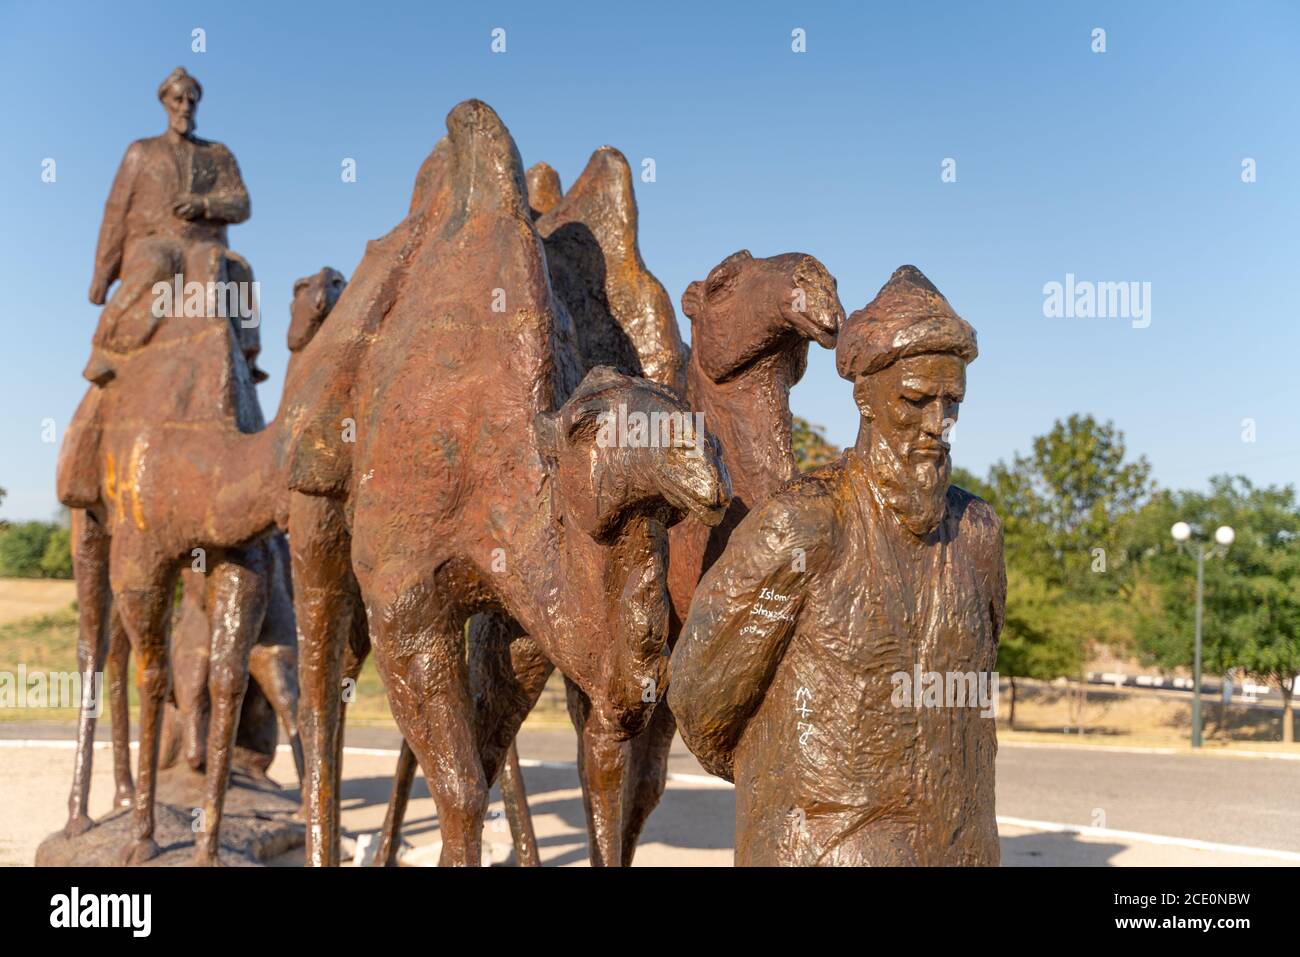 The old bronze statue of camels caravan in Uzbekistan, Samarkand Stock Photo